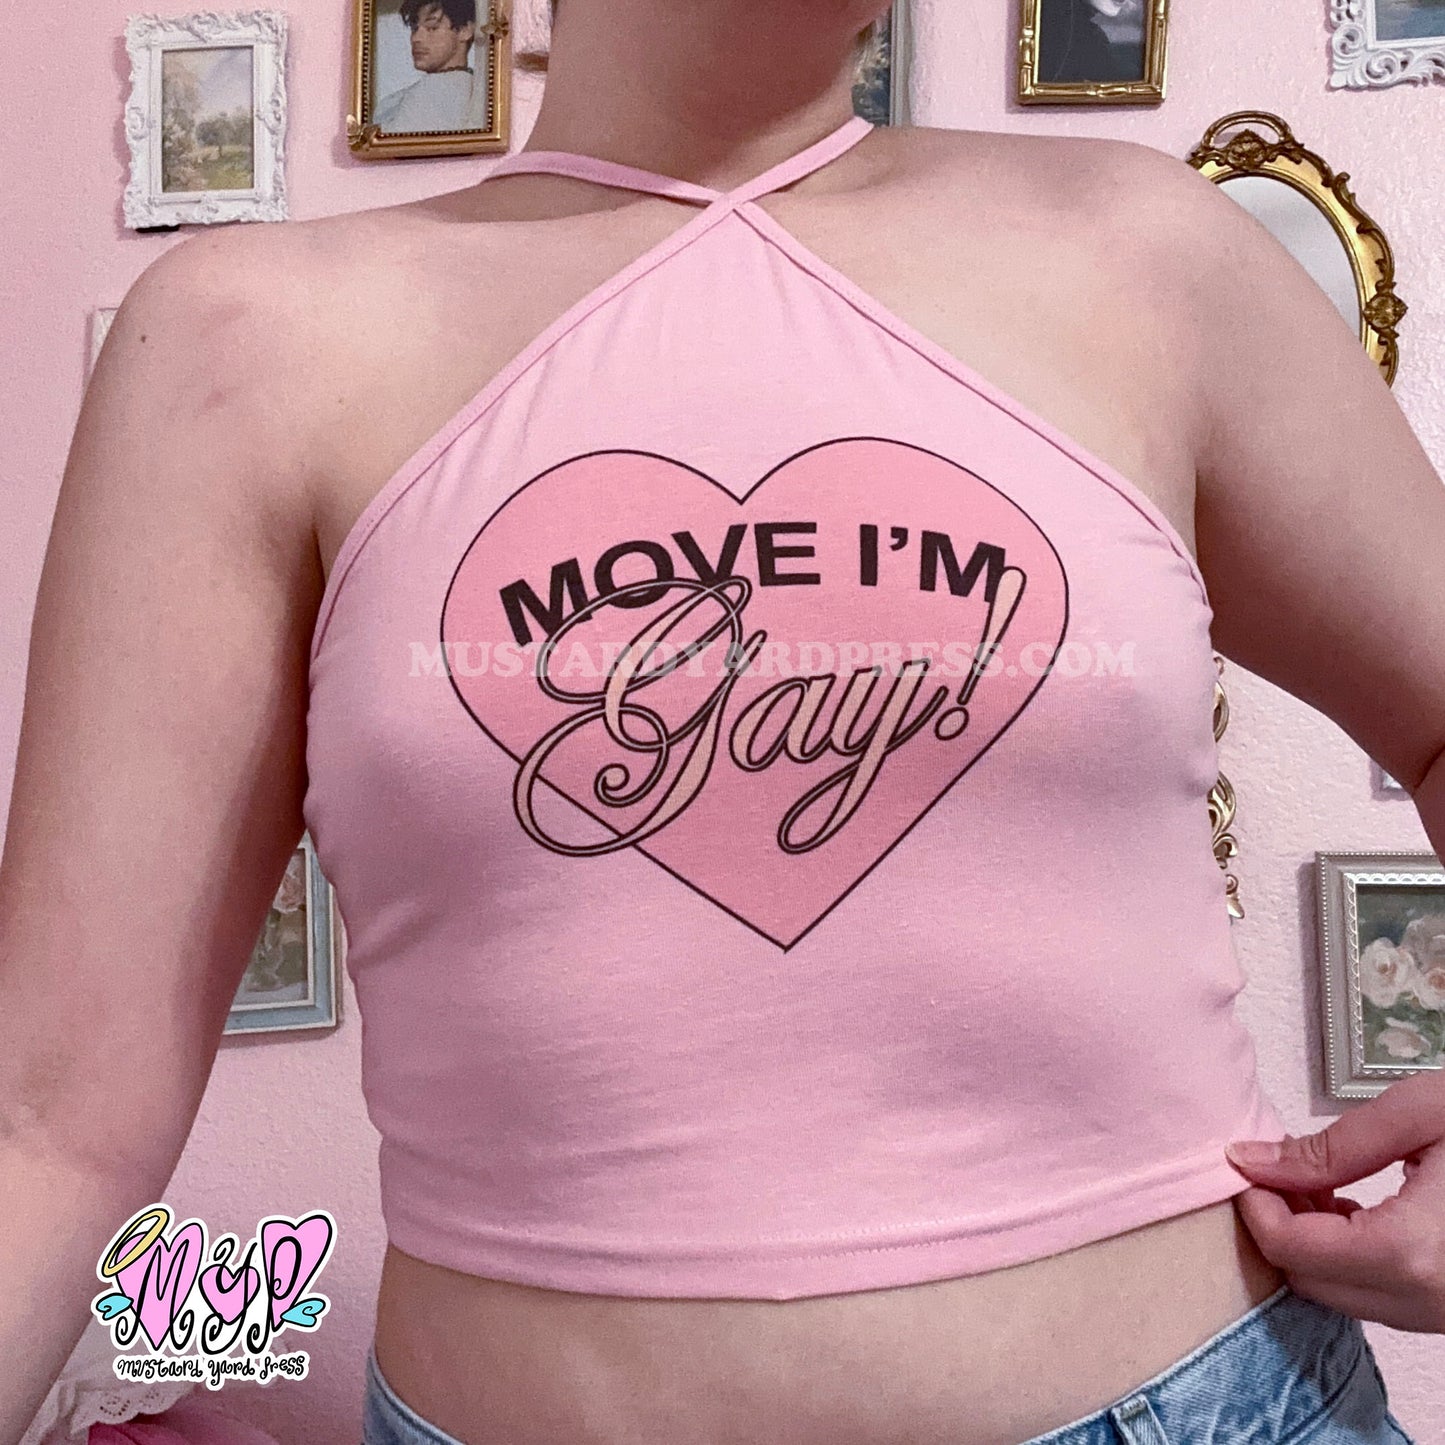 move i'm gay pink crop top